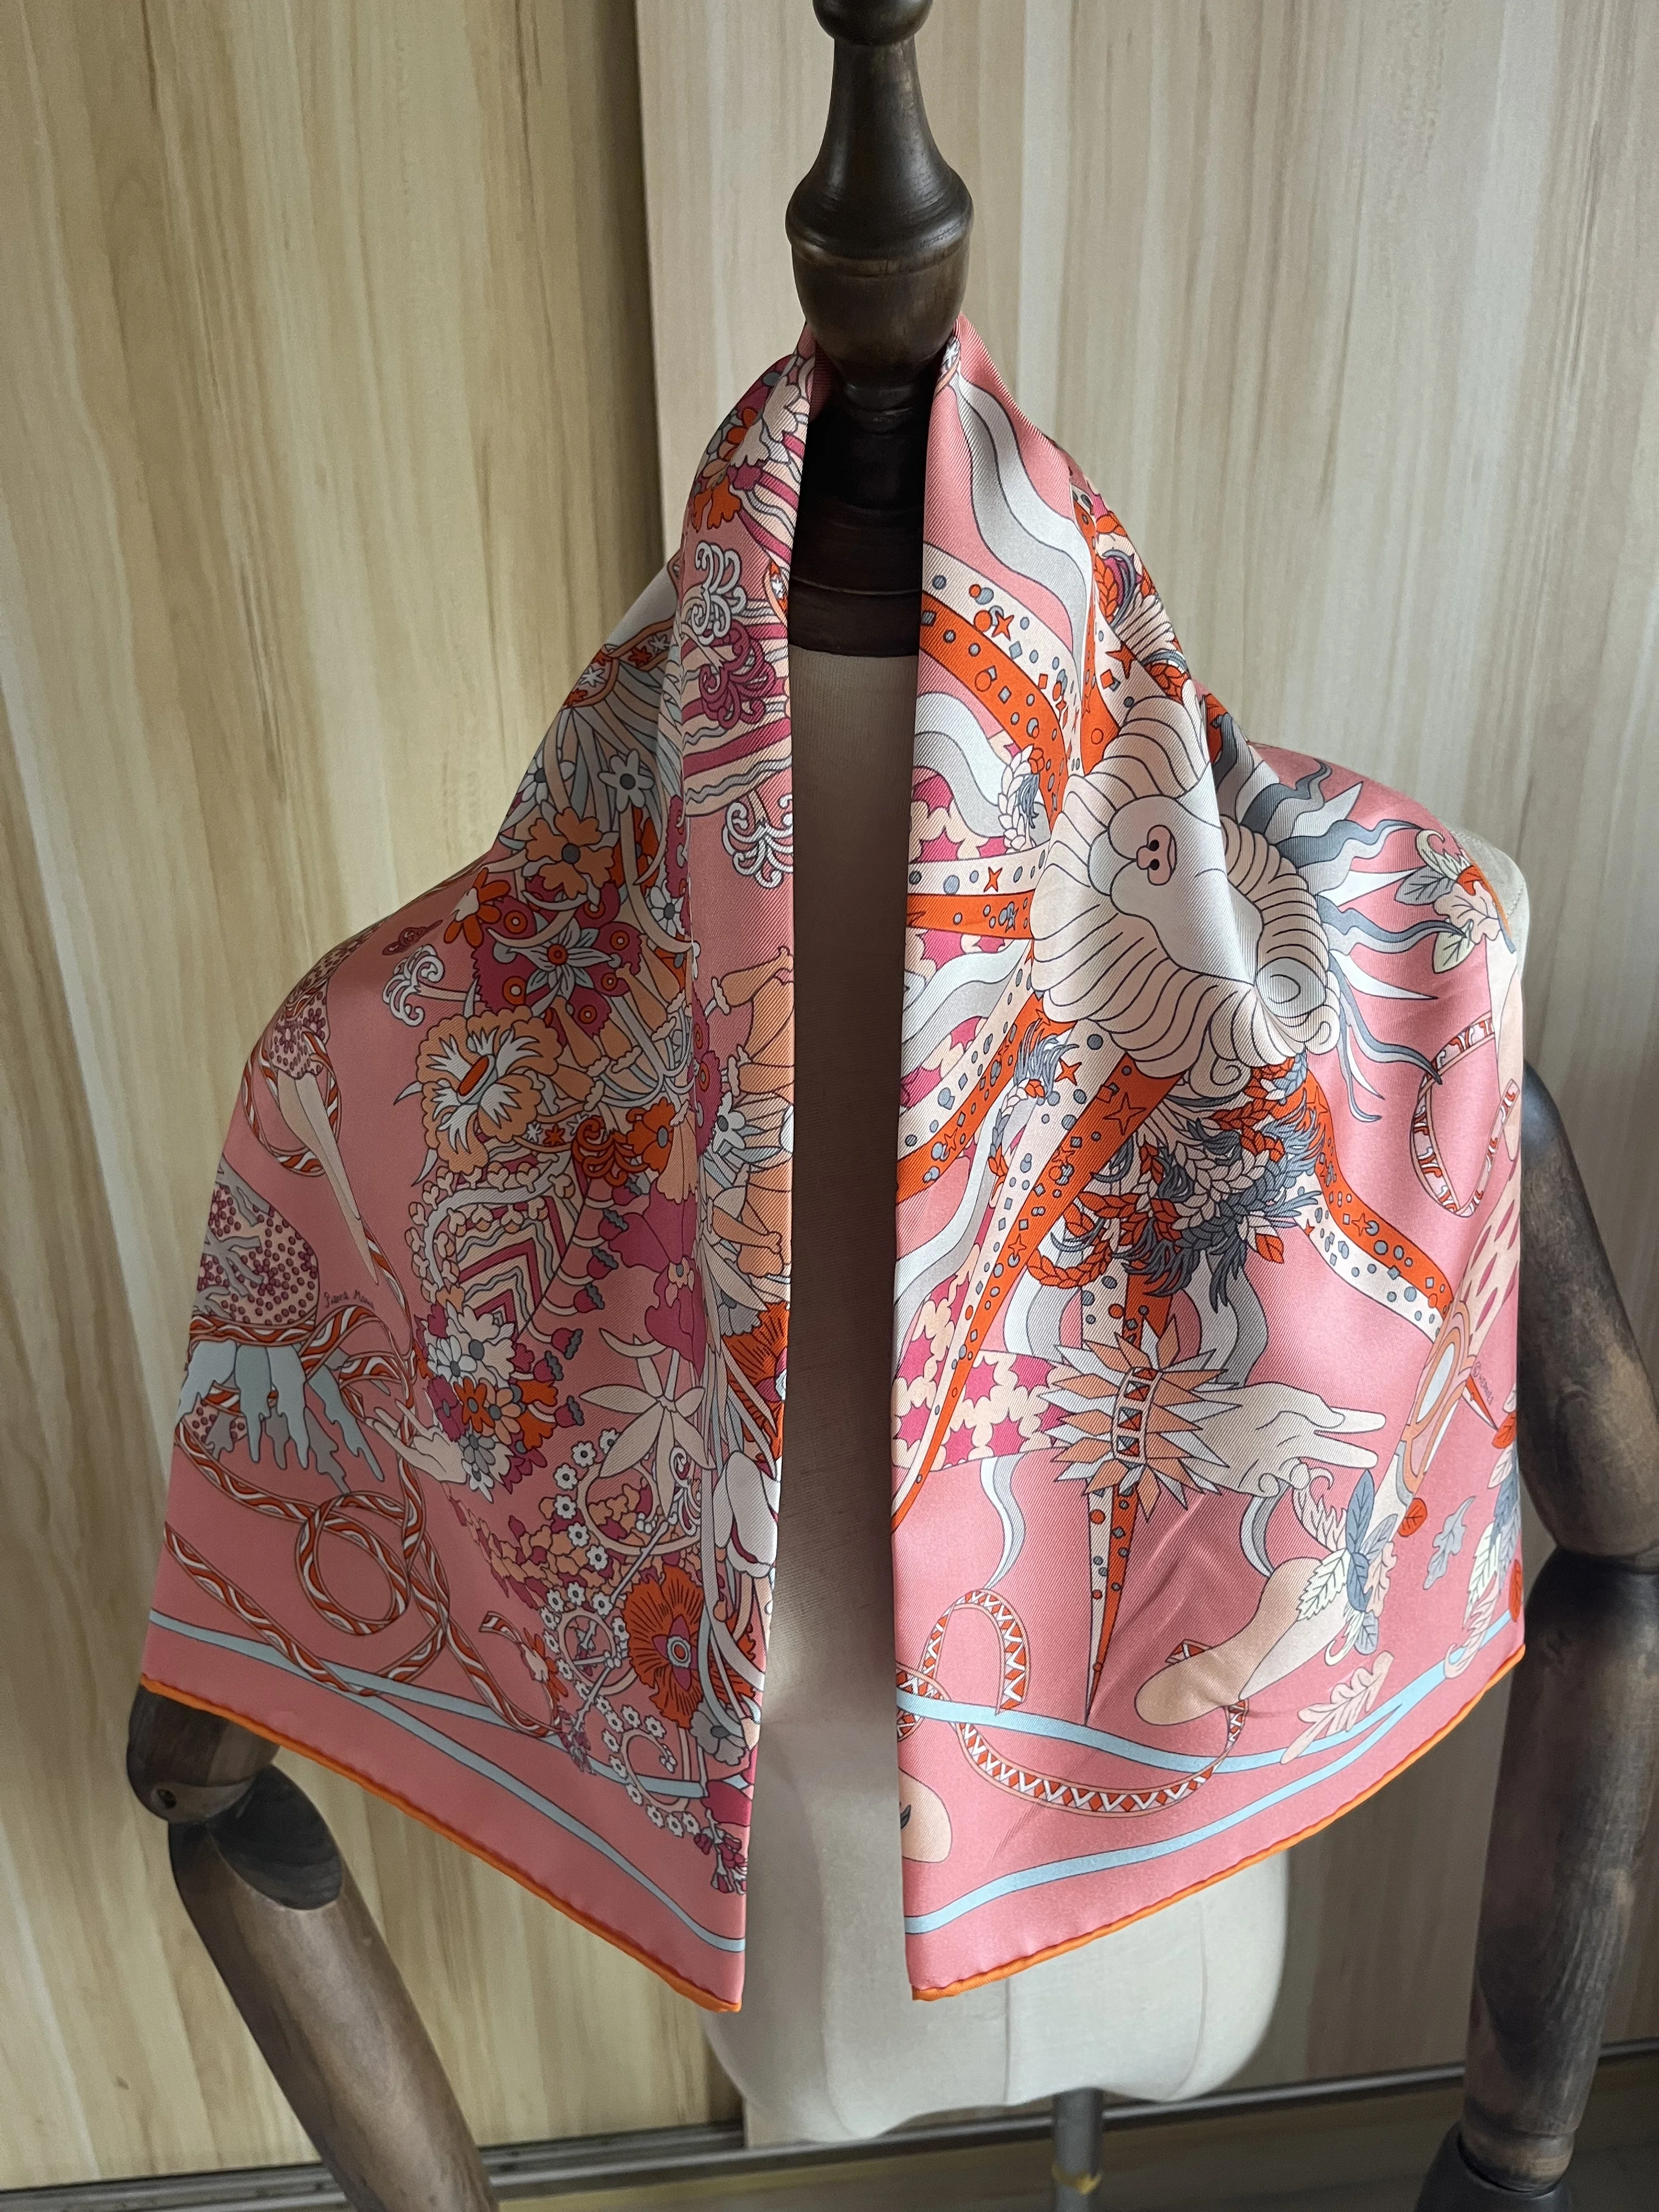 2022 new arrival fashion elegant pink 18MM 100% silk scarf 90*90 cm square shawl twill wrap for women lady girl gift